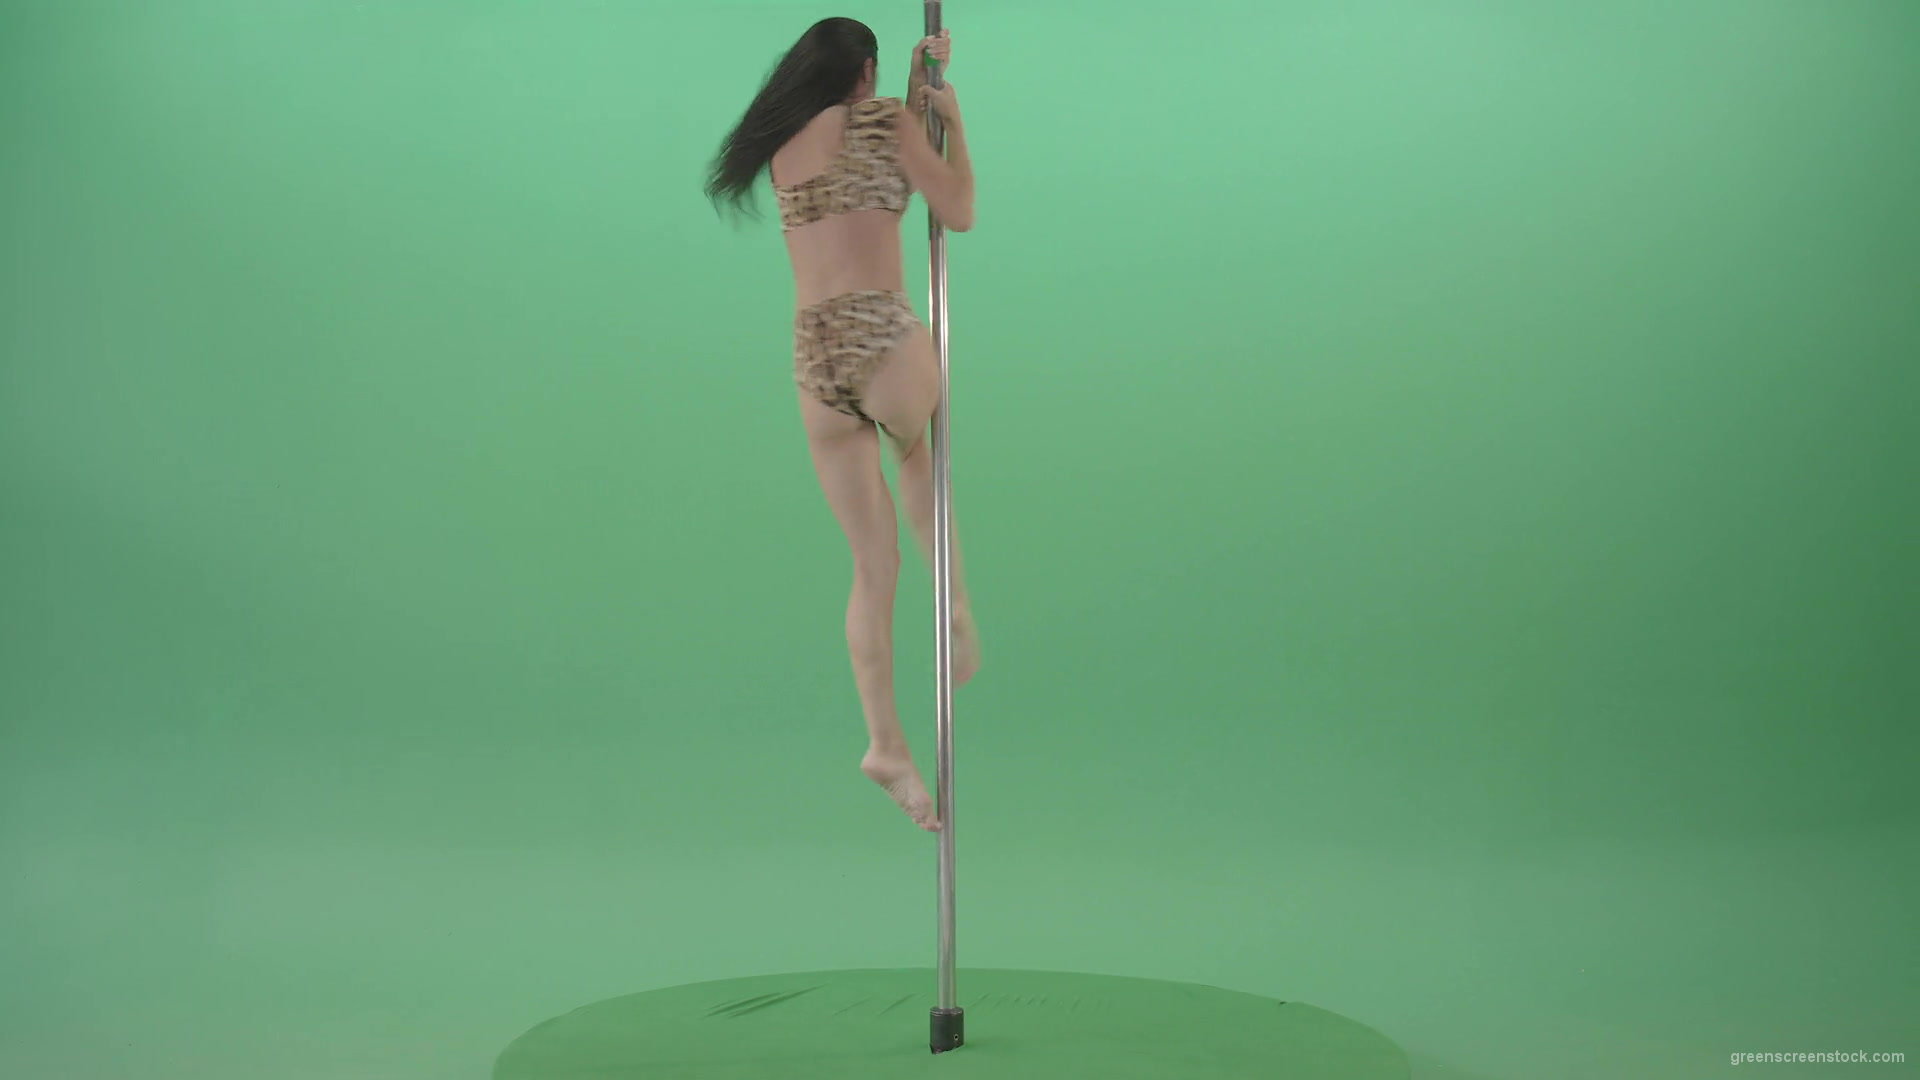 Athletic-sexy-female-model-spinning-on-pilon-in-jaguar-skin-underwear-dancing-pole-dance-on-Green-Screen-4K-Video-Footage-1920_008 Green Screen Stock